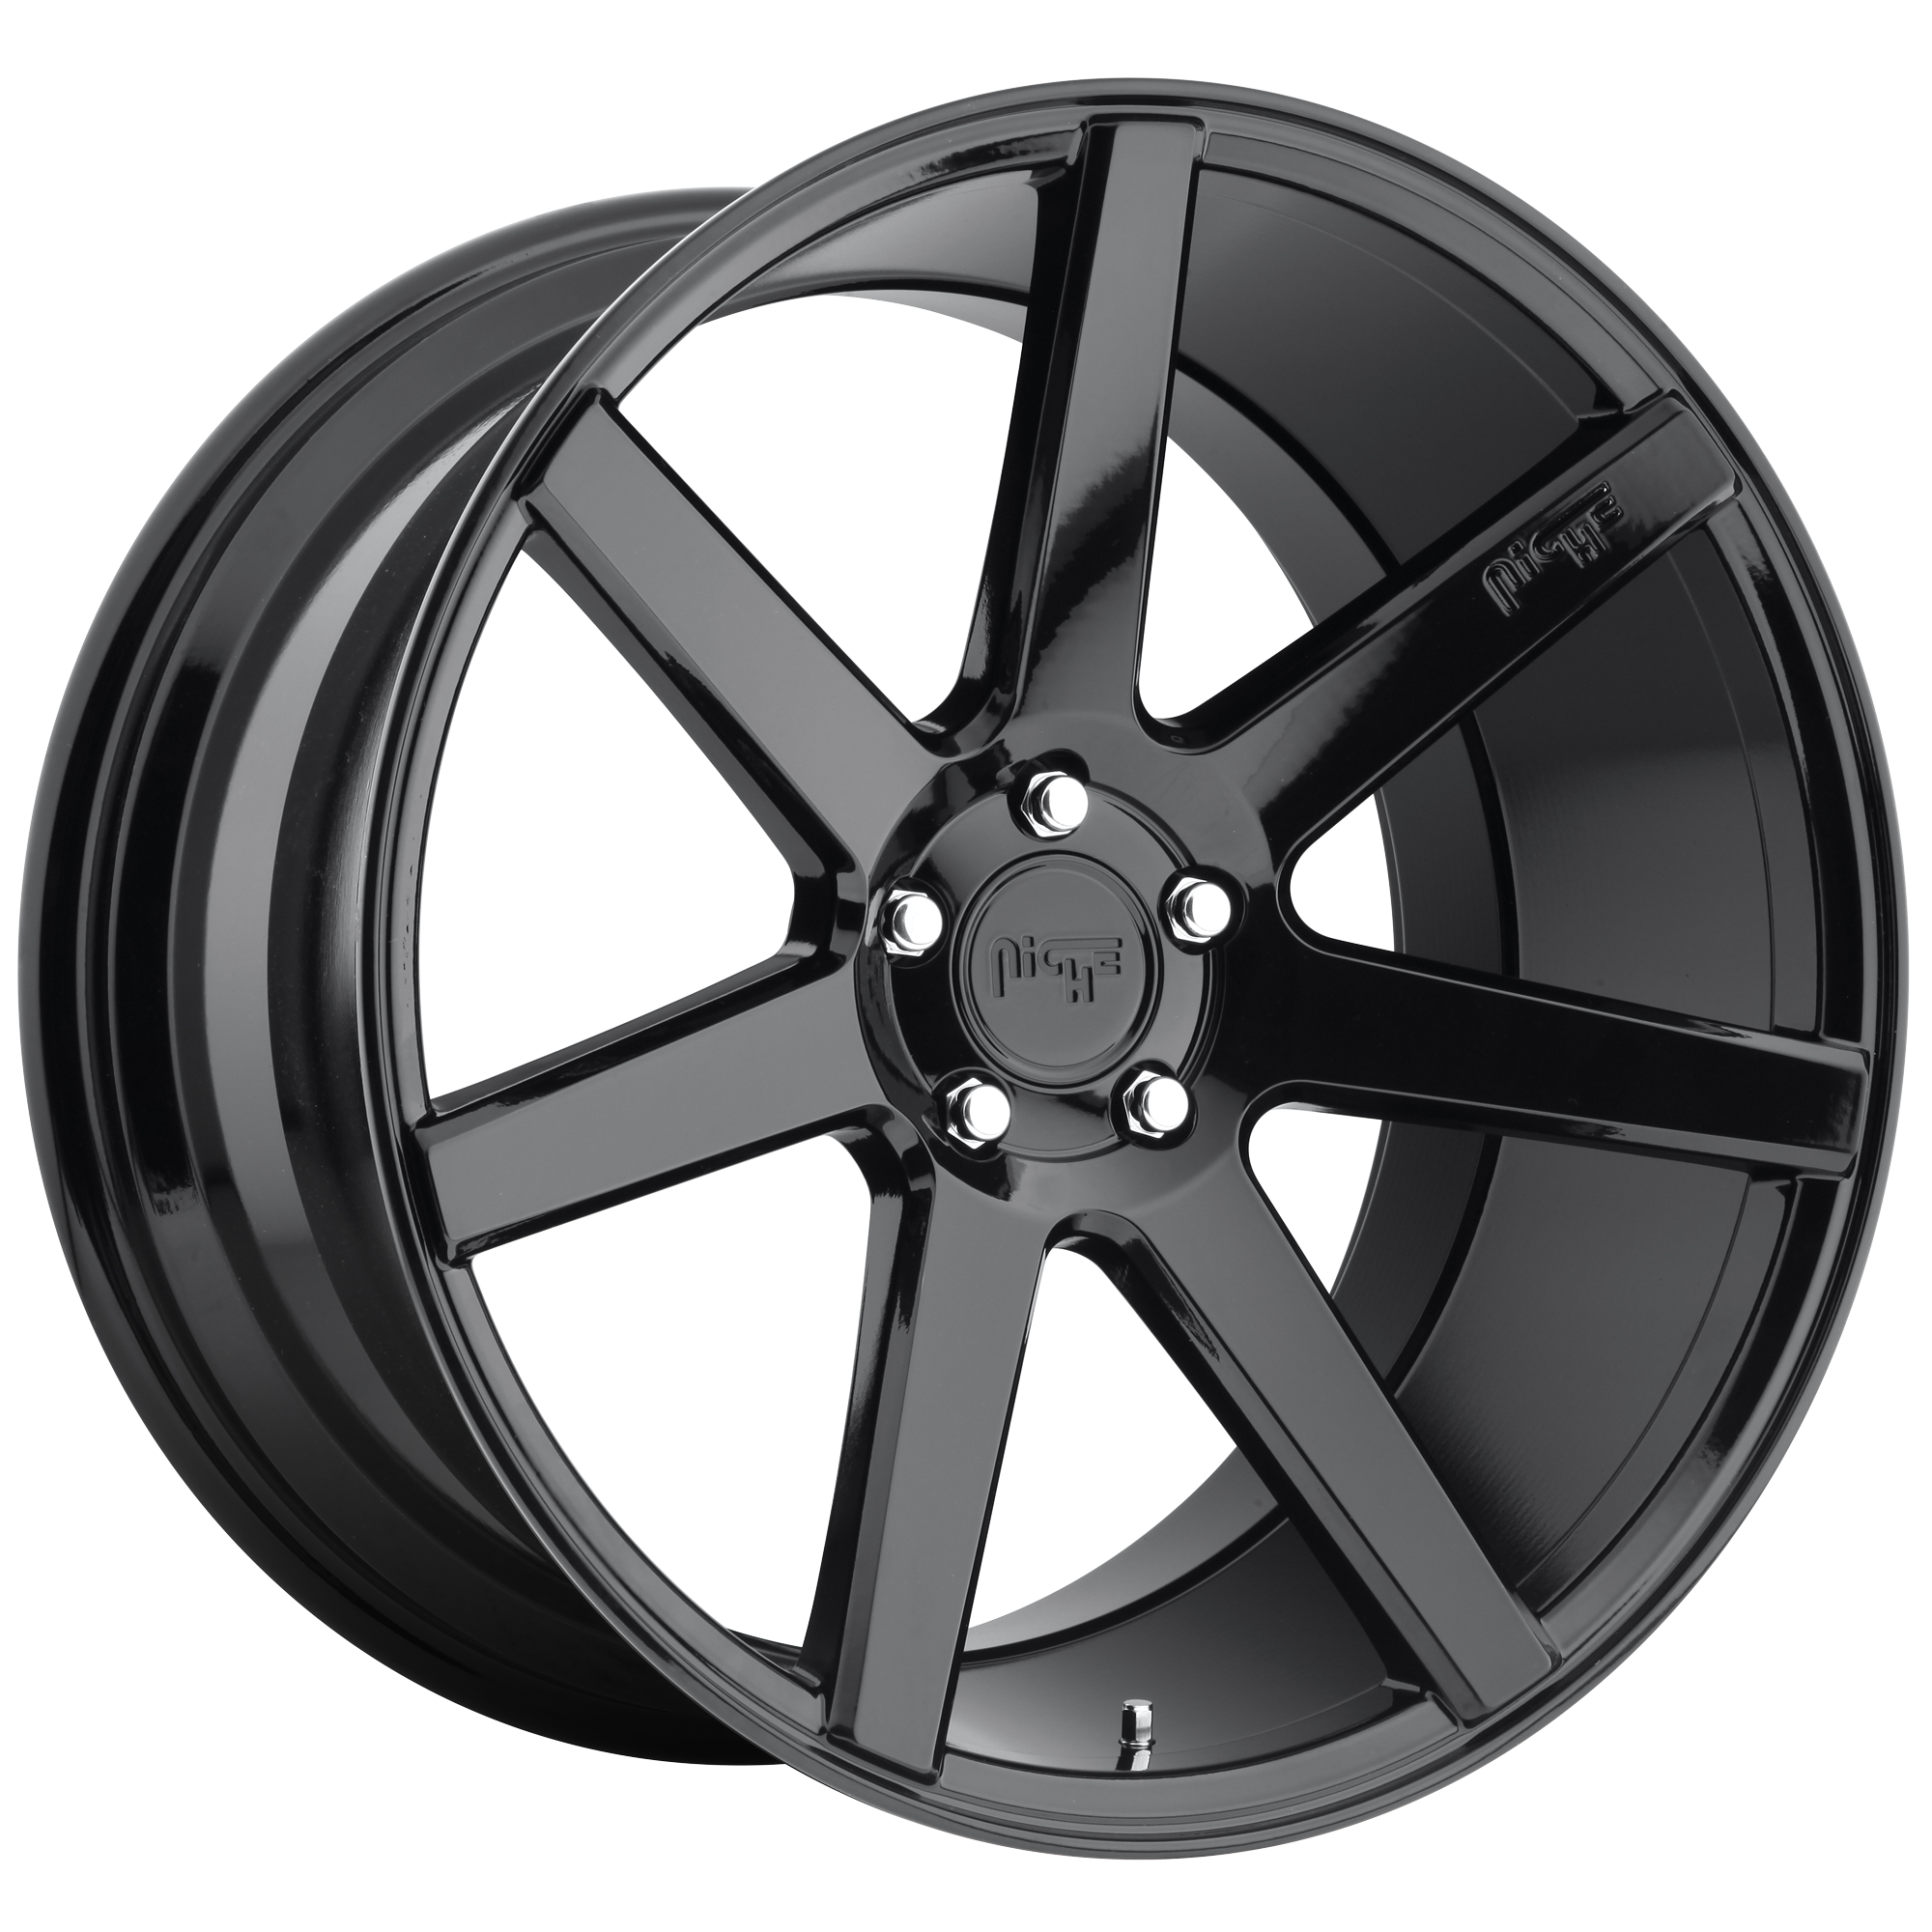 VERONA 20x10 5x120.00 GLOSS BLACK (40 mm) - Tires and Engine Performance